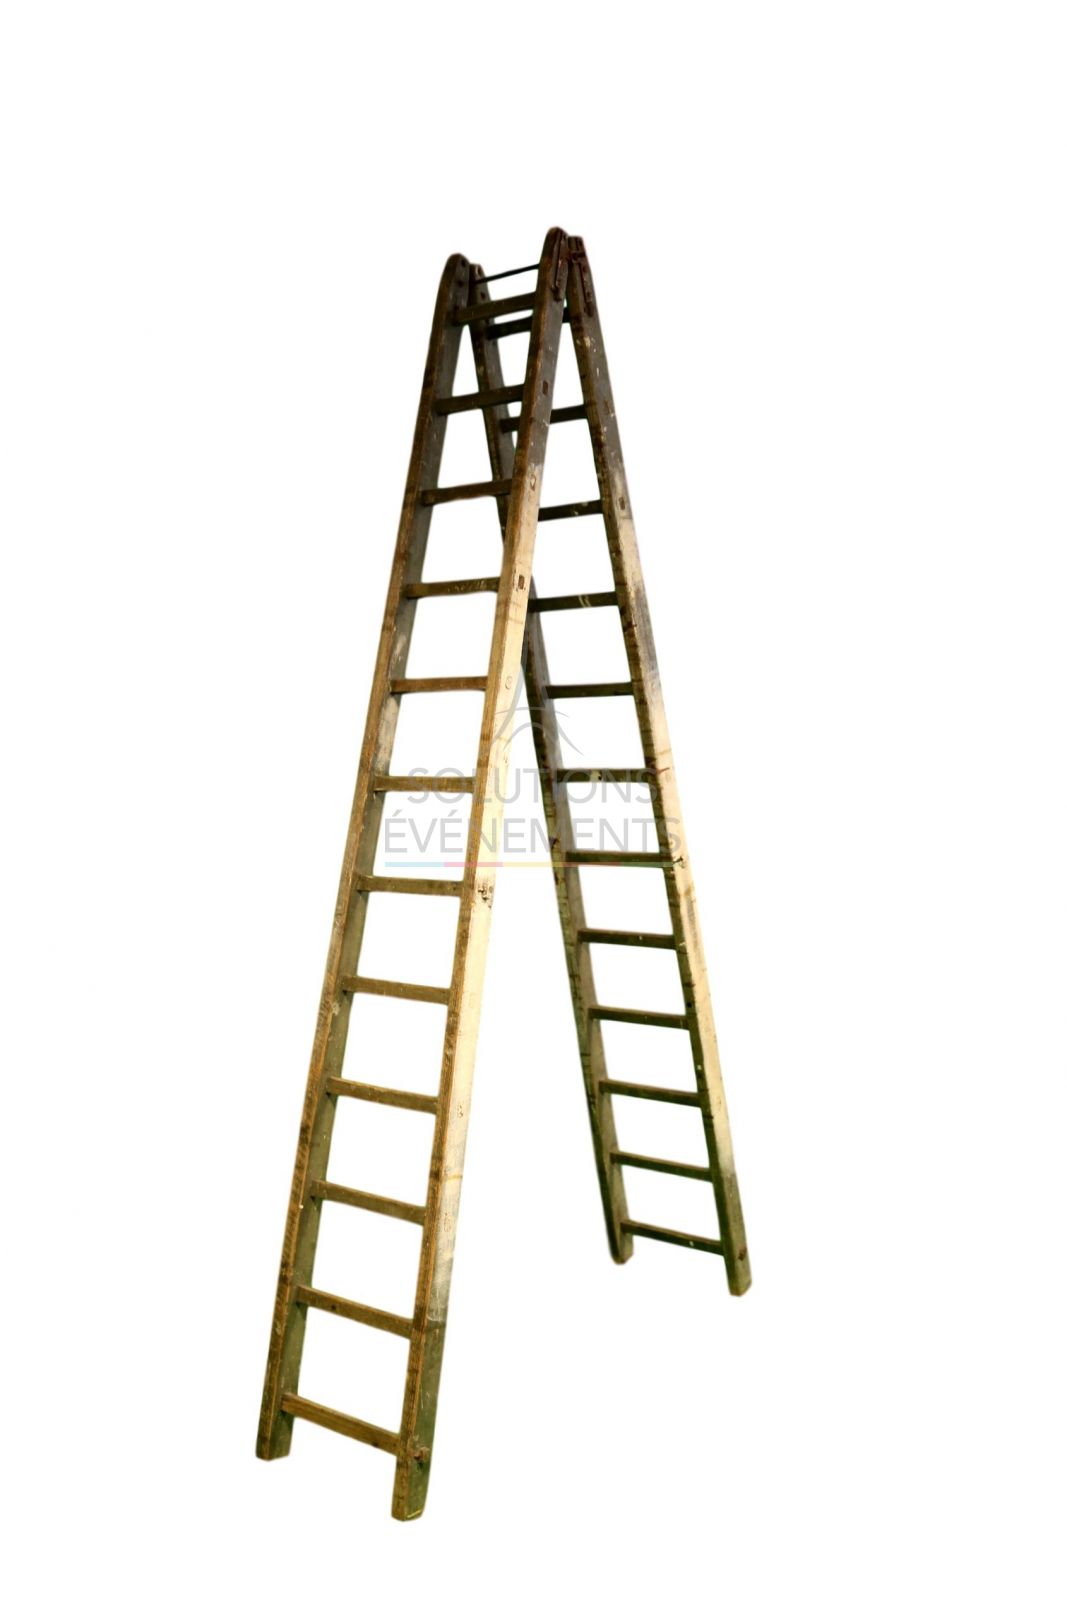 Vintage type wooden ladder decorative rental